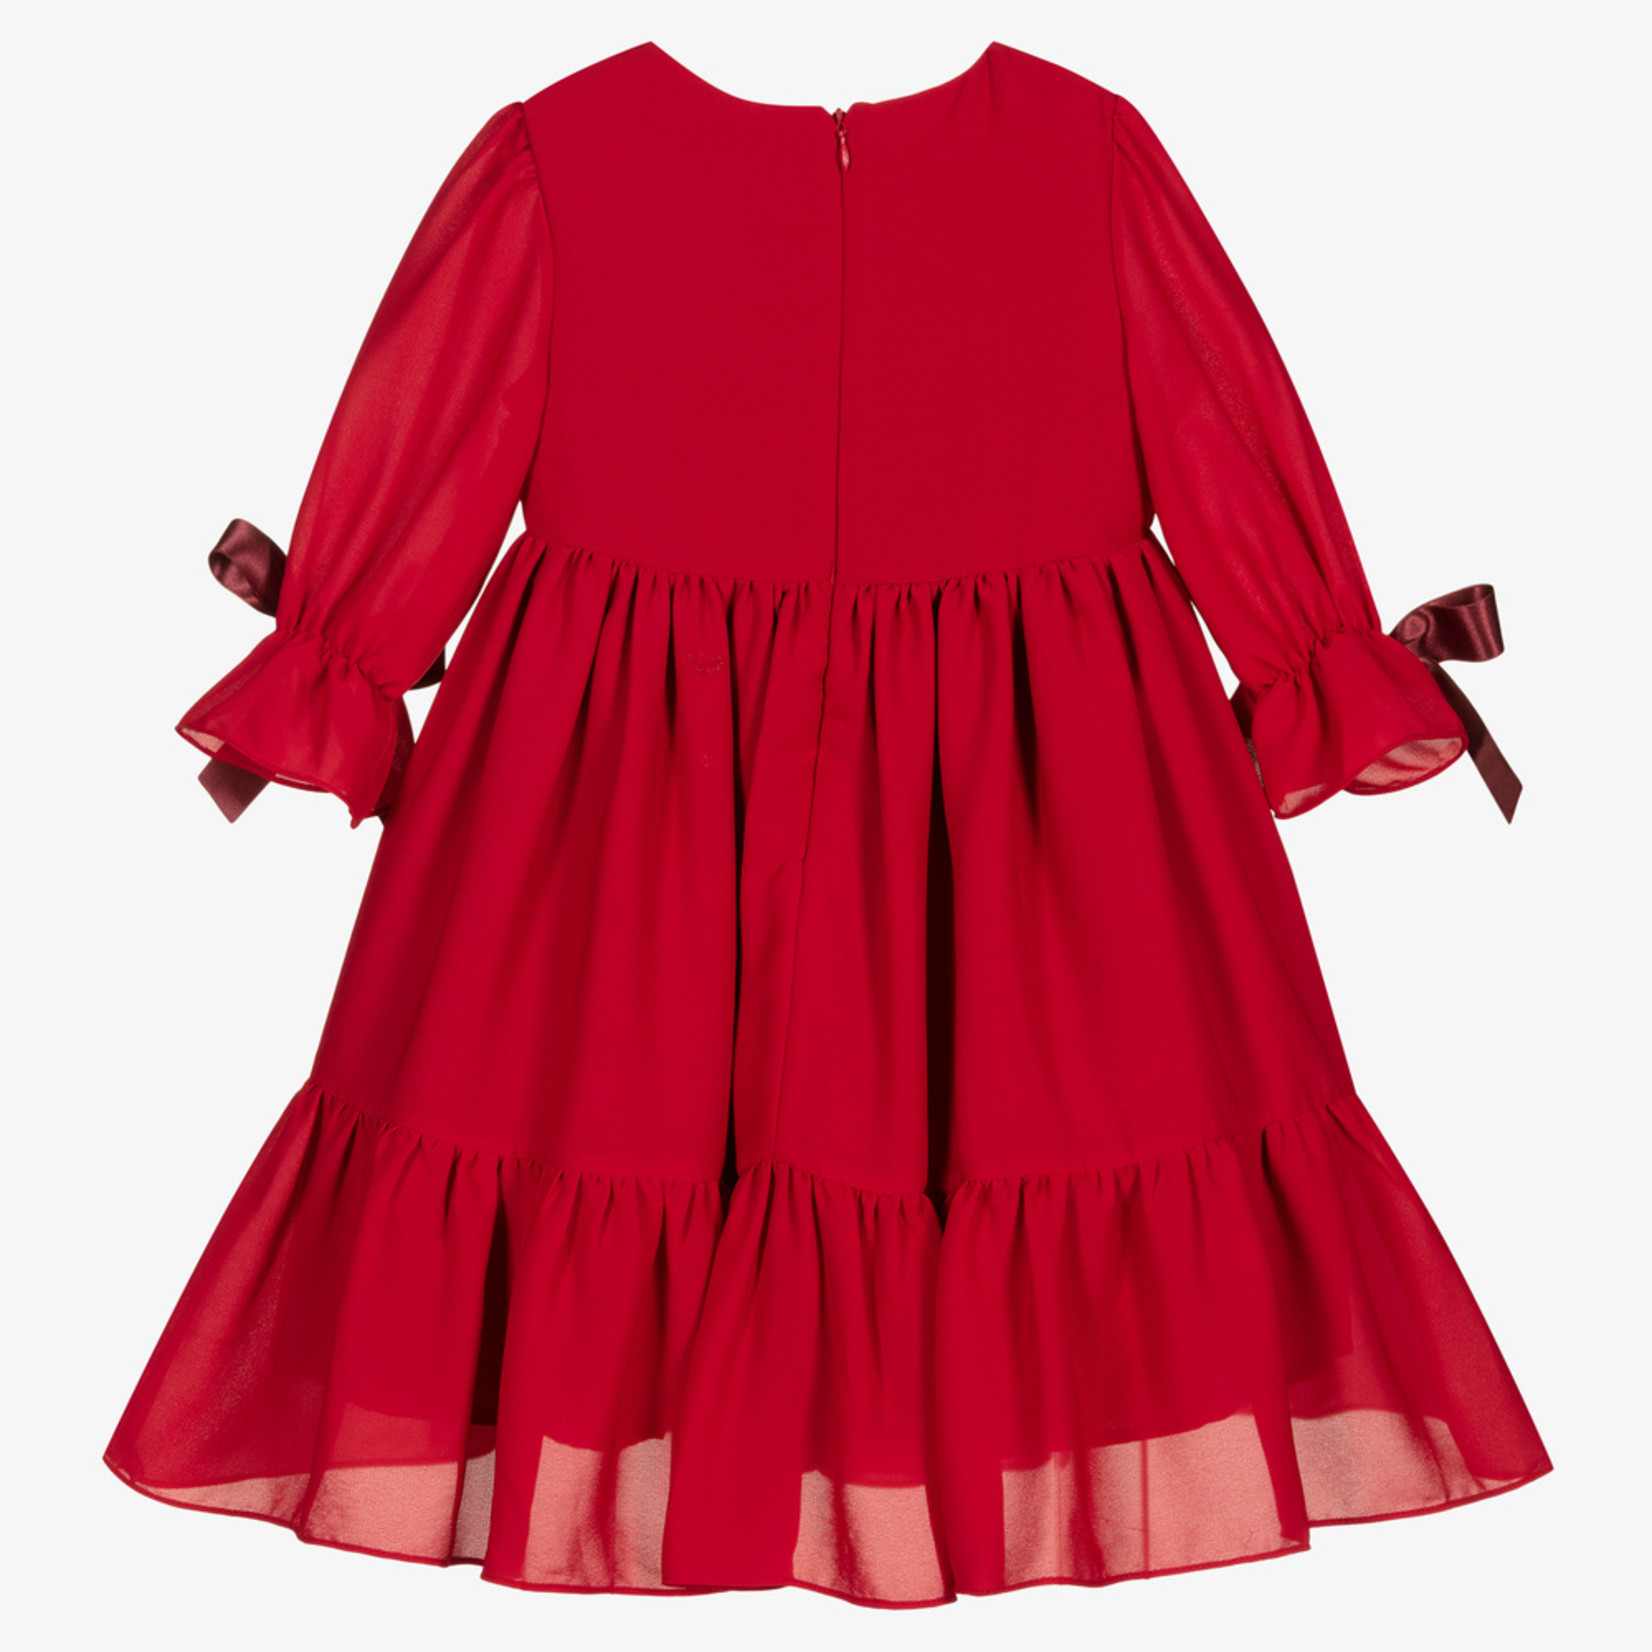 Patachou Patachou - Girls Red Chiffon Dress